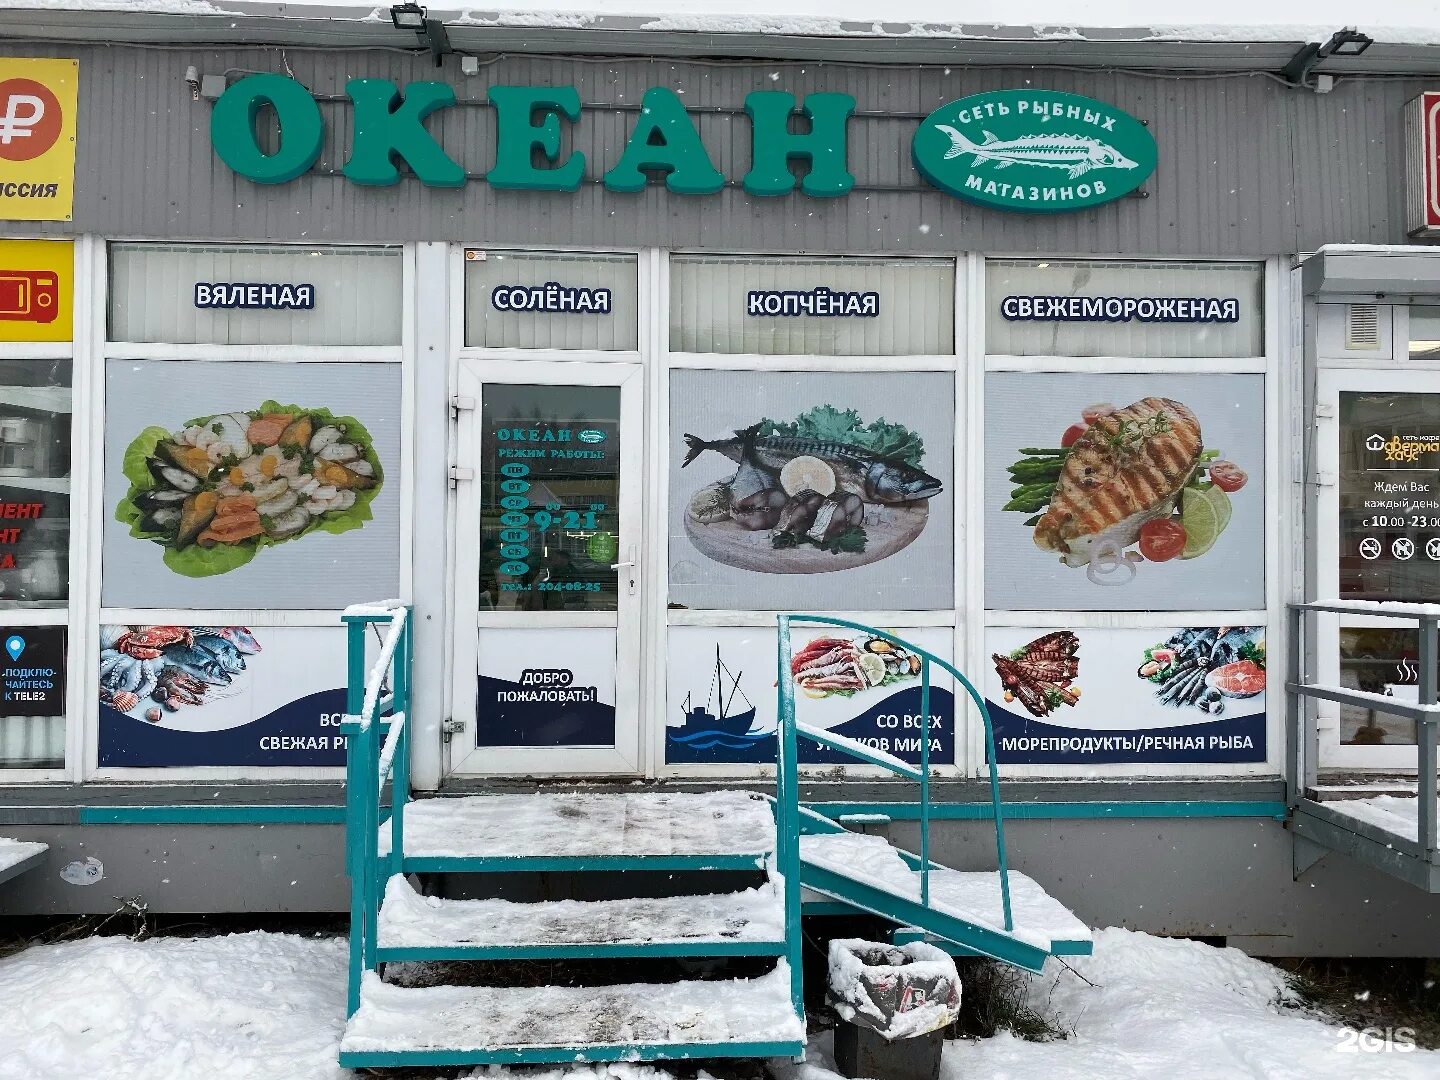 Океан магазин рыбы. Рыбный магазин. Сеть рыбных магазинов. Сеть рыбных магазинов в Москве. Рыбный магазин океан.